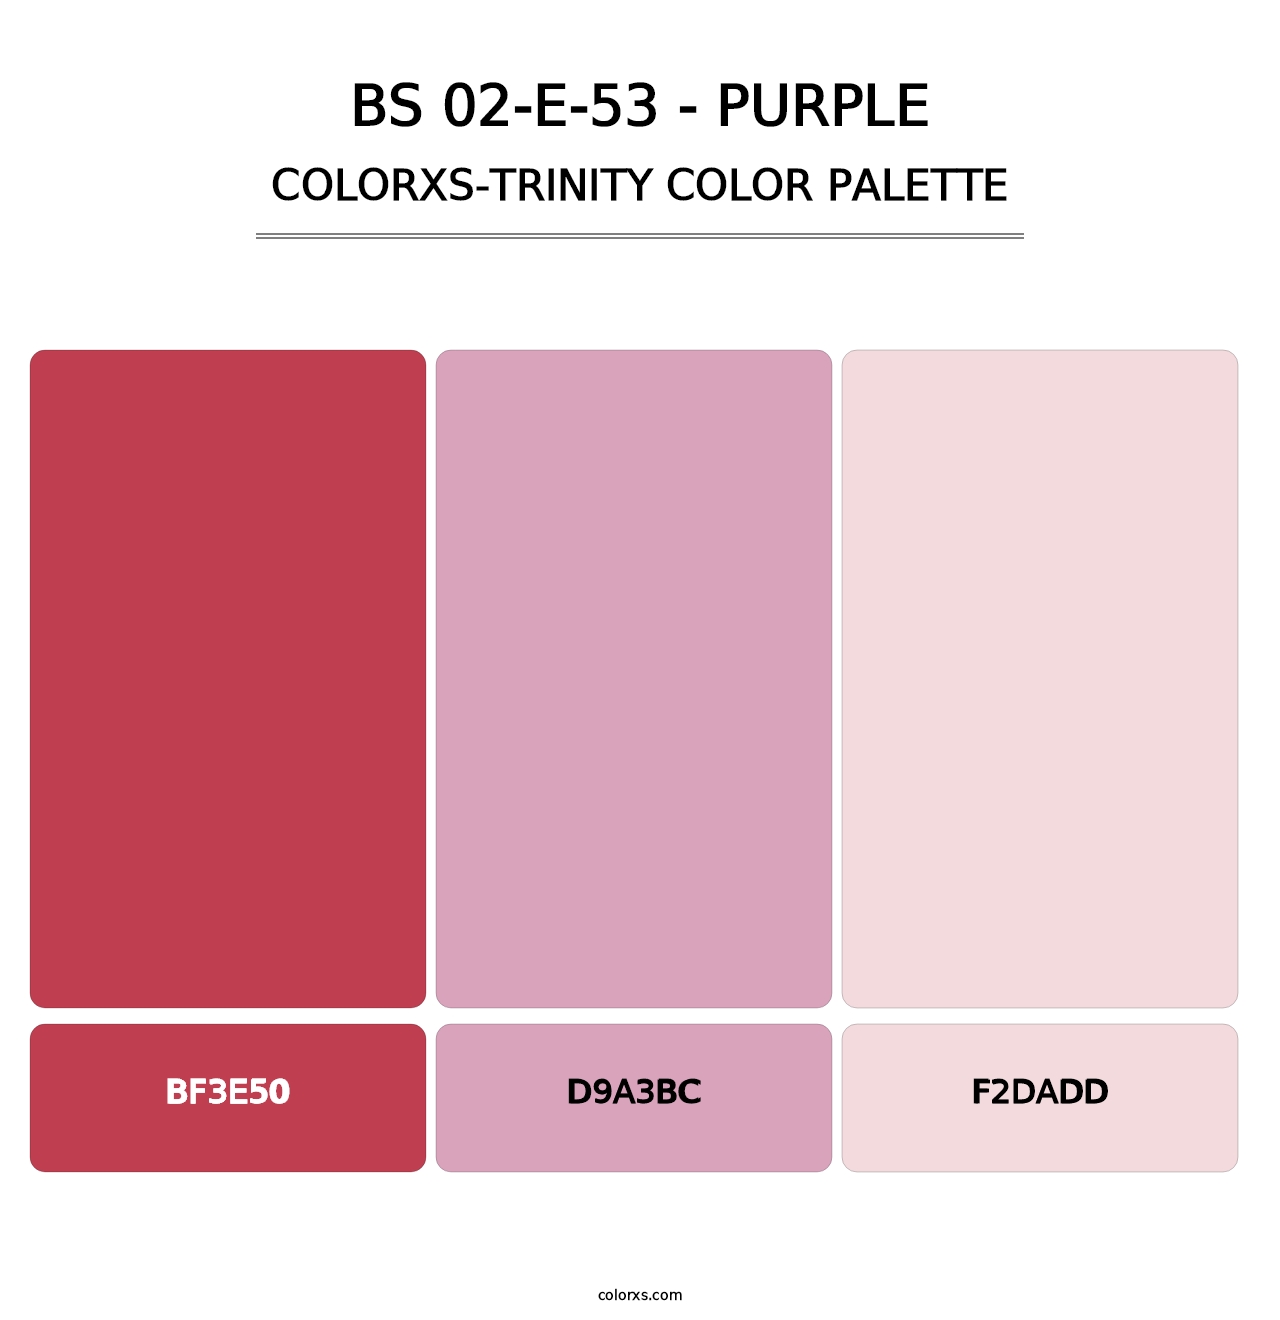 BS 02-E-53 - Purple - Colorxs Trinity Palette